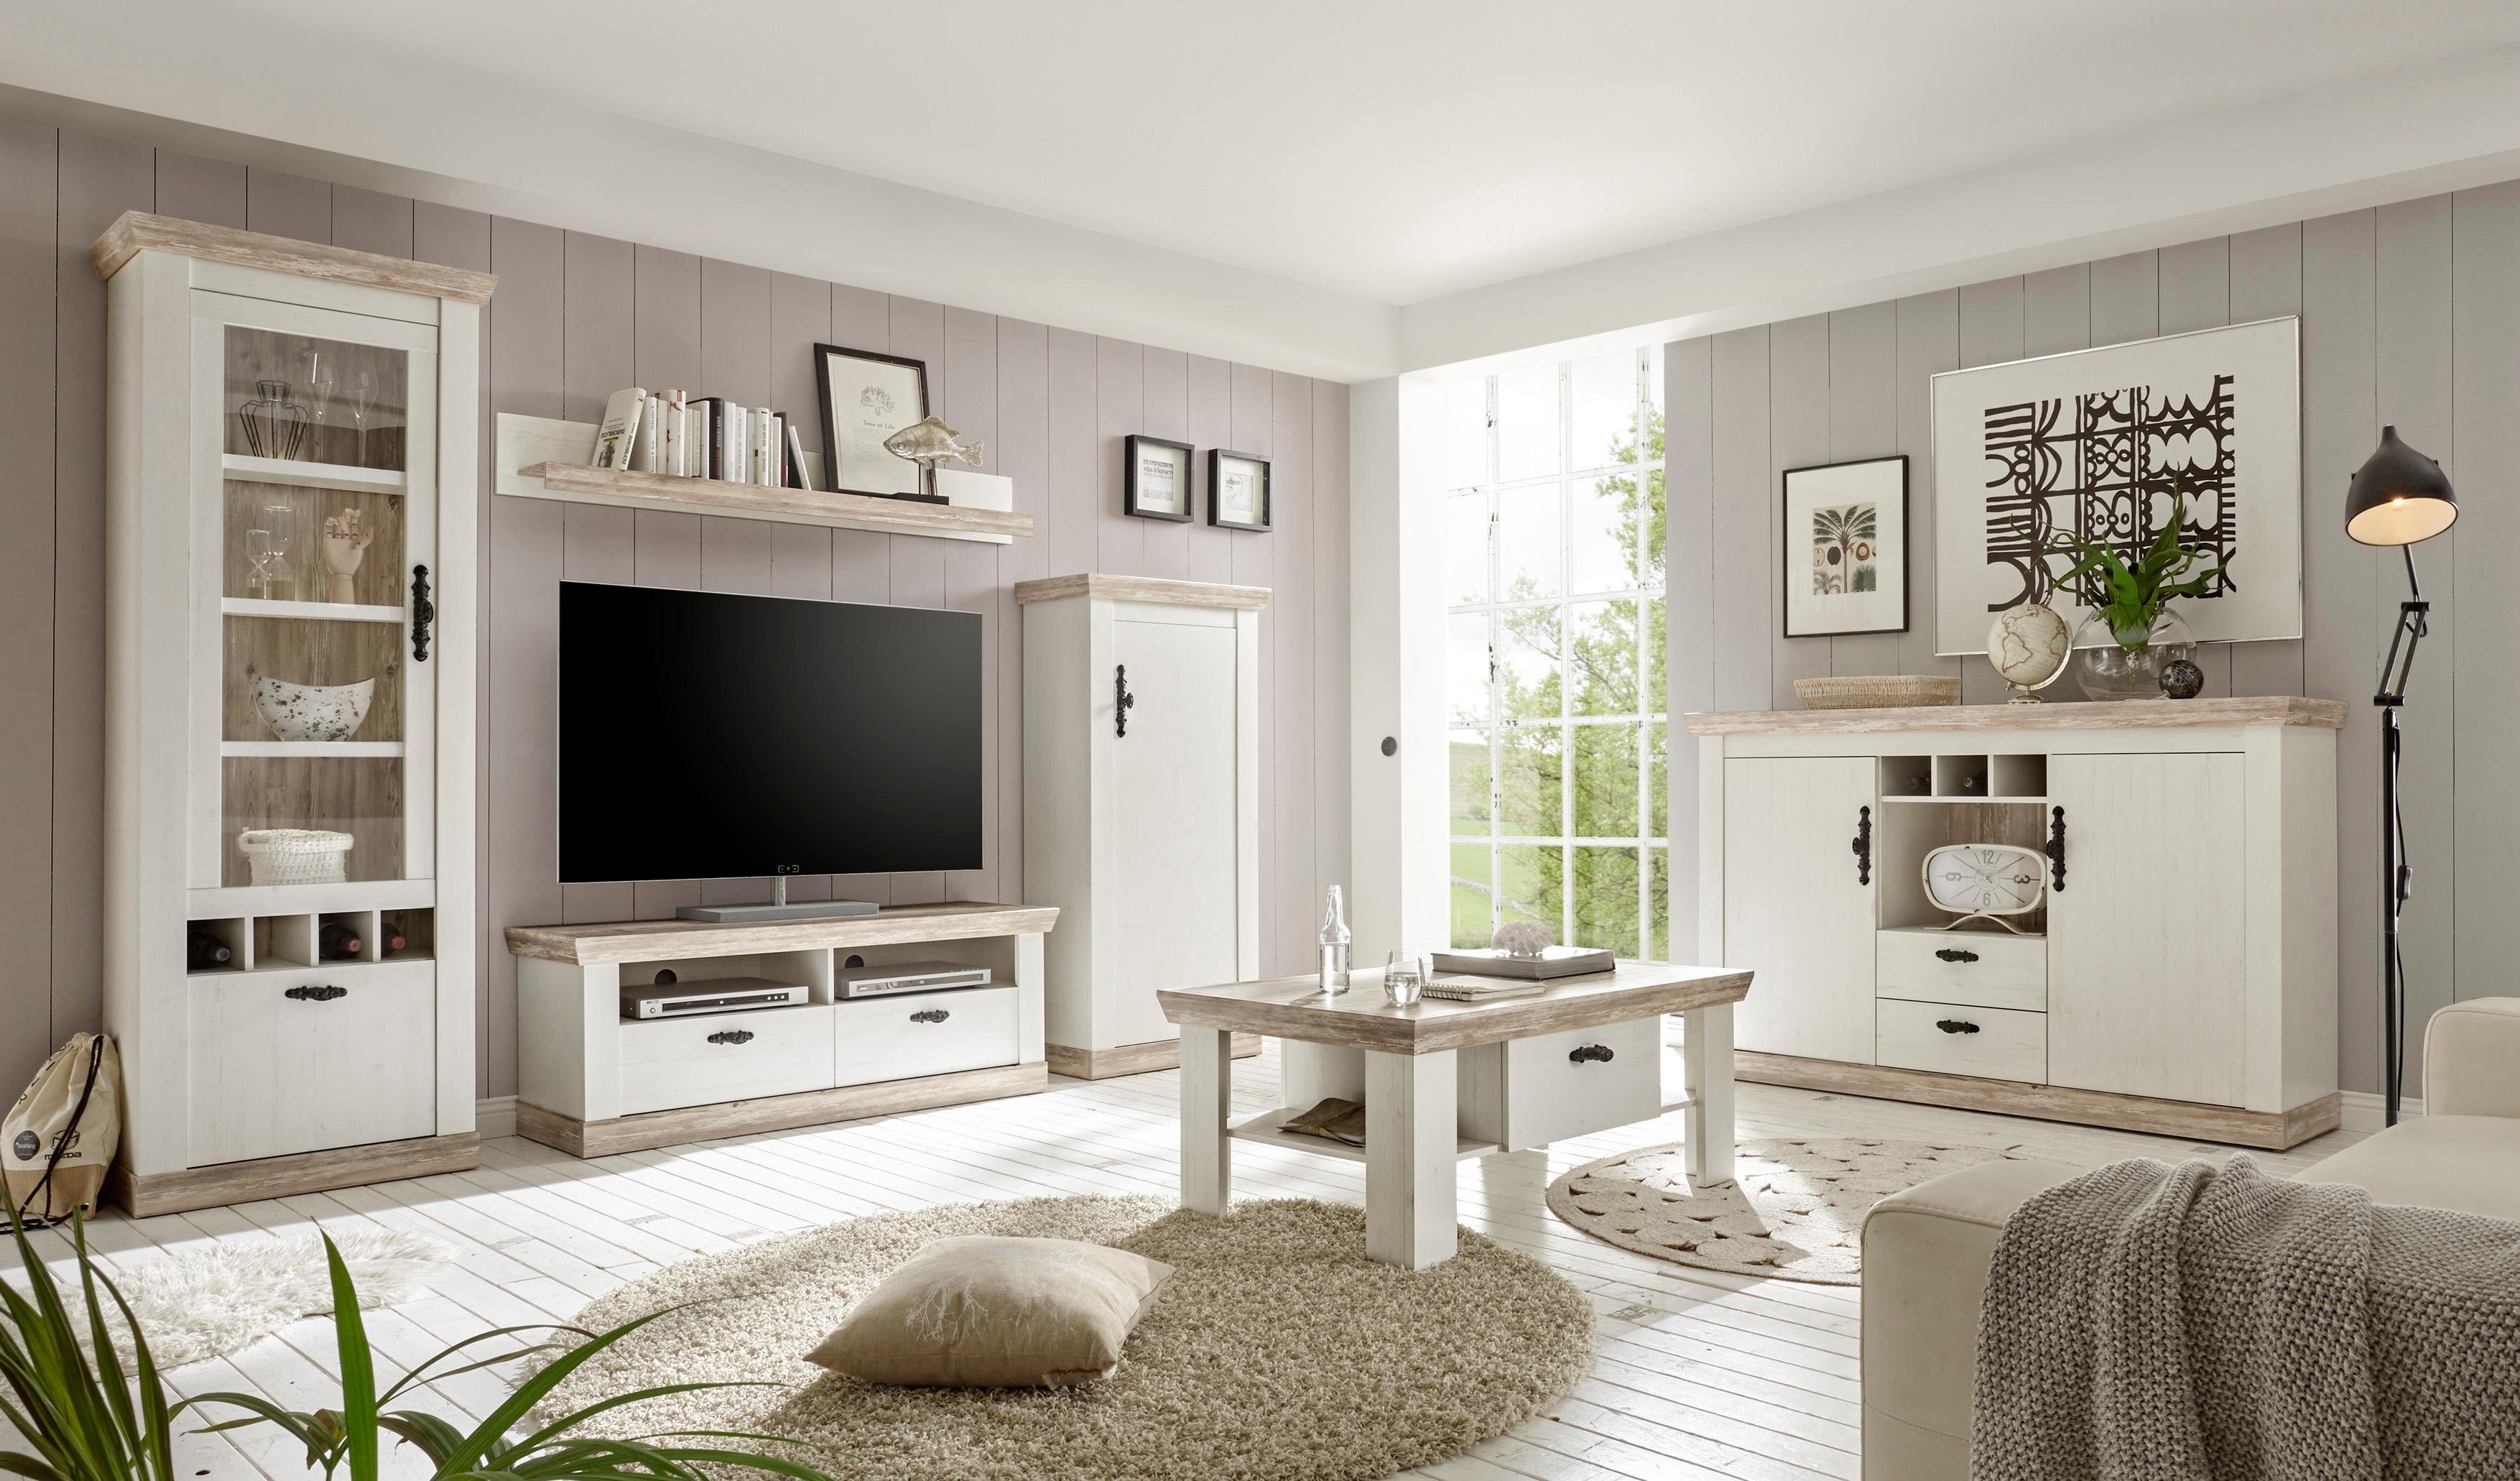 Home affaire Tv-meubel Florence romantische tv-tafel breedte 156 cm? Bestel nu bij | OTTO